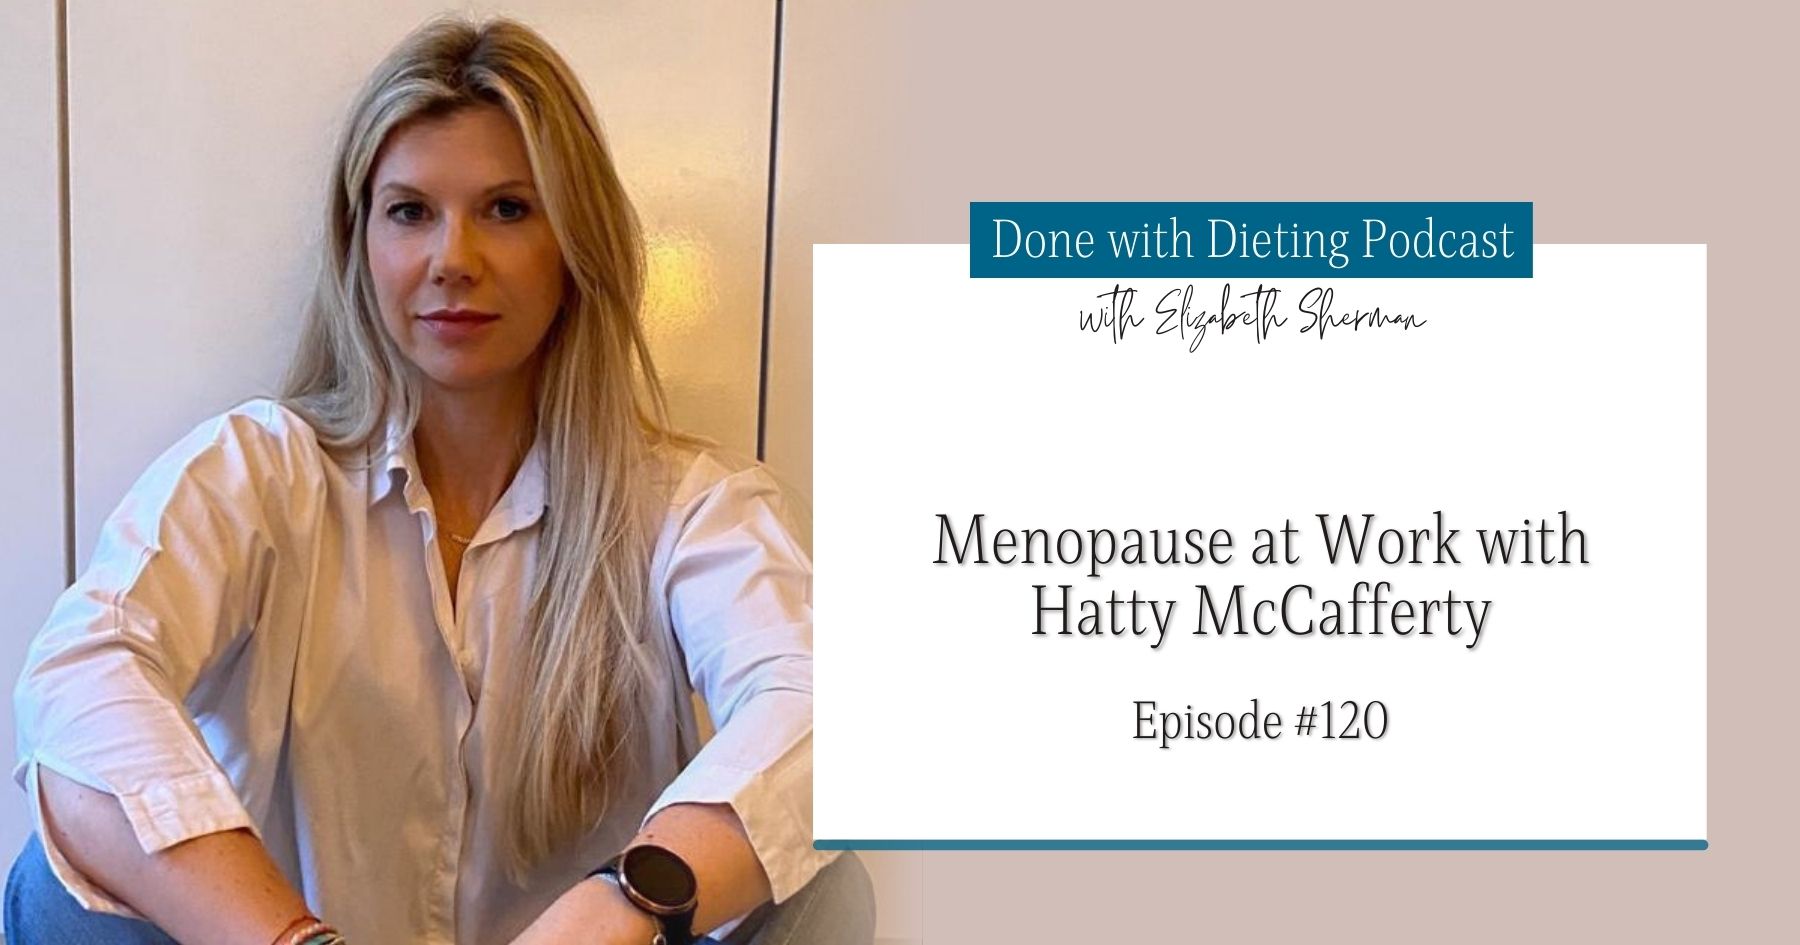 Menopause at Work with Hatty McCafferty